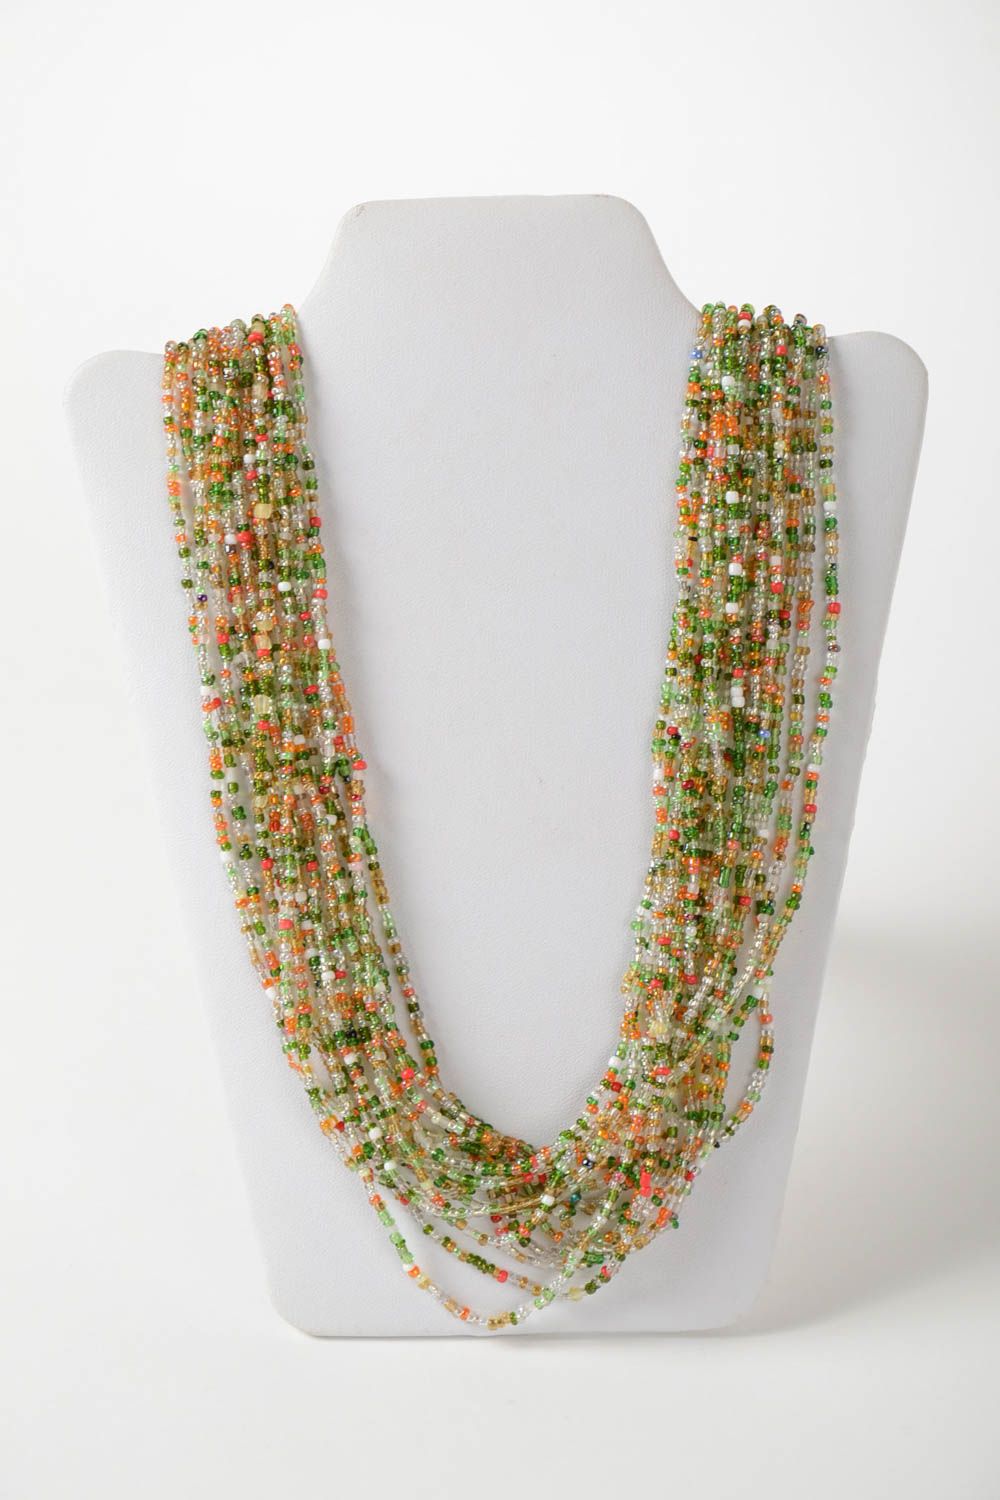 Stylish handmade beaded necklace beautiful necklace designs womens jewelry ideas photo 2